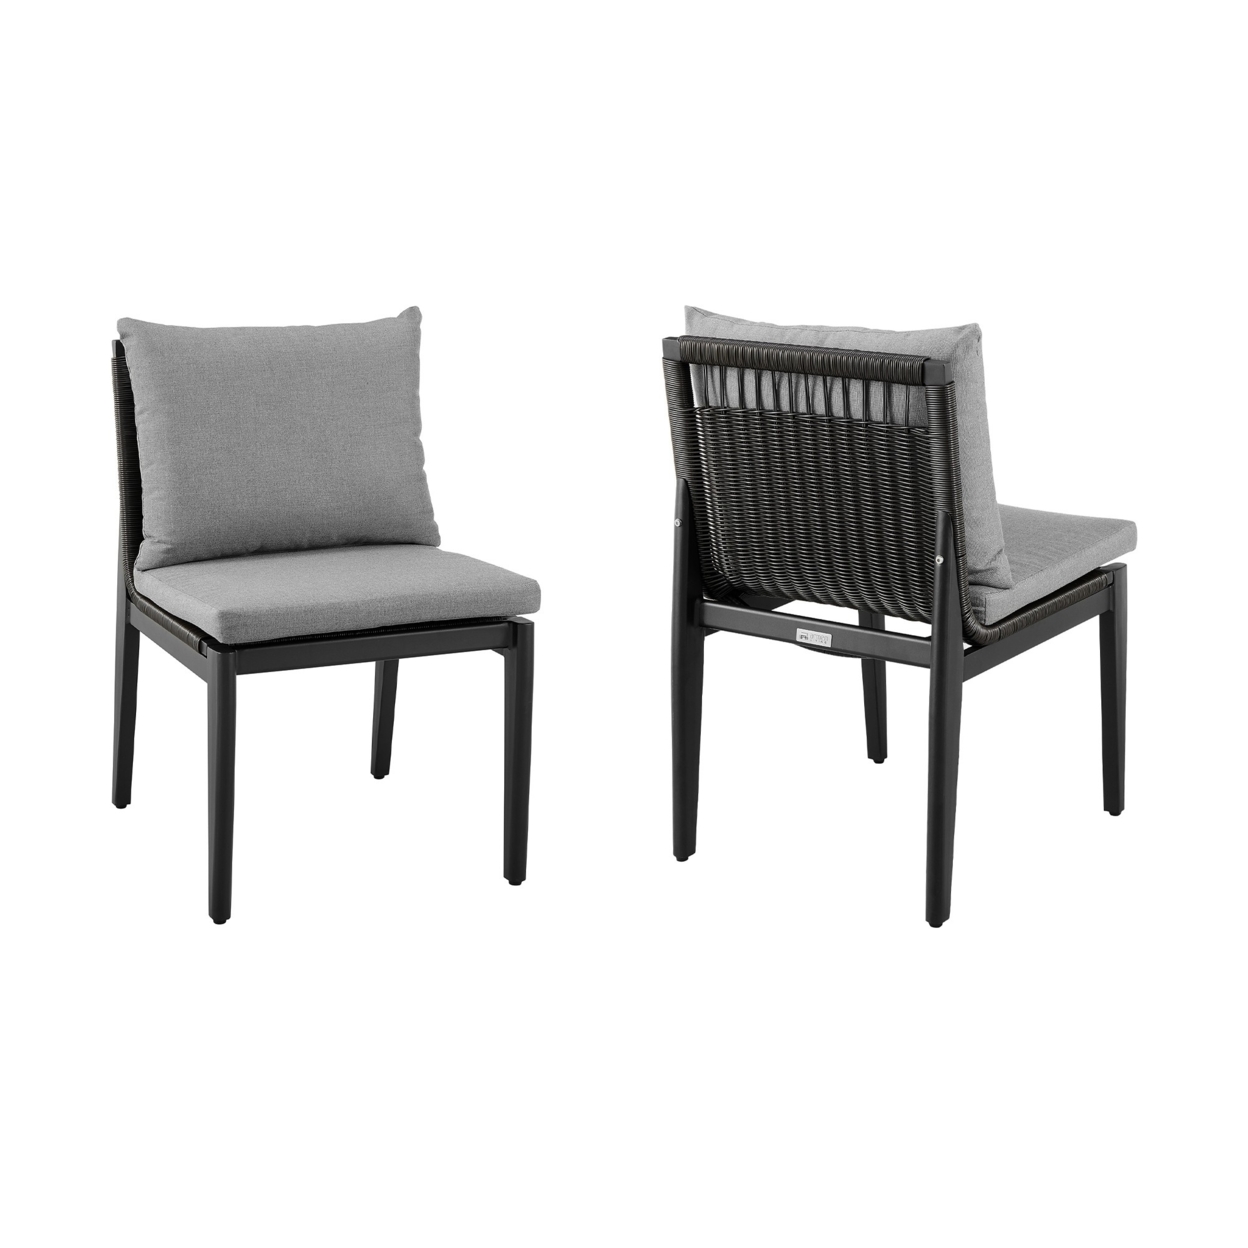 Ollie 20 Inch Patio Armless Dining Chair, Set Of 2, Aluminum, Gray Cushions- Saltoro Sherpi